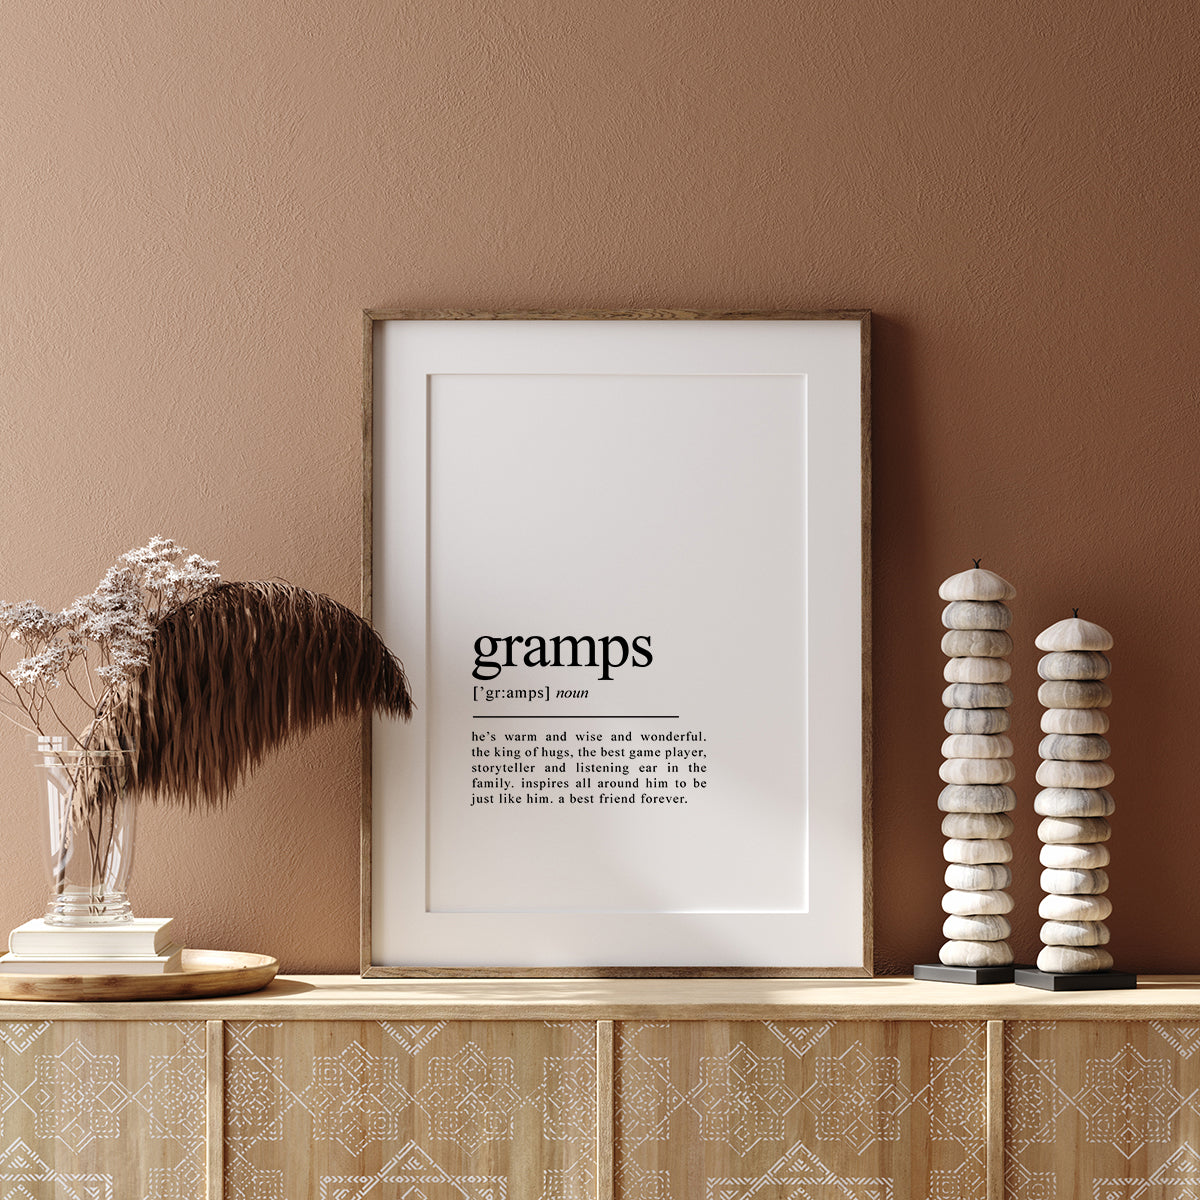 gramps definition print, grandad gift